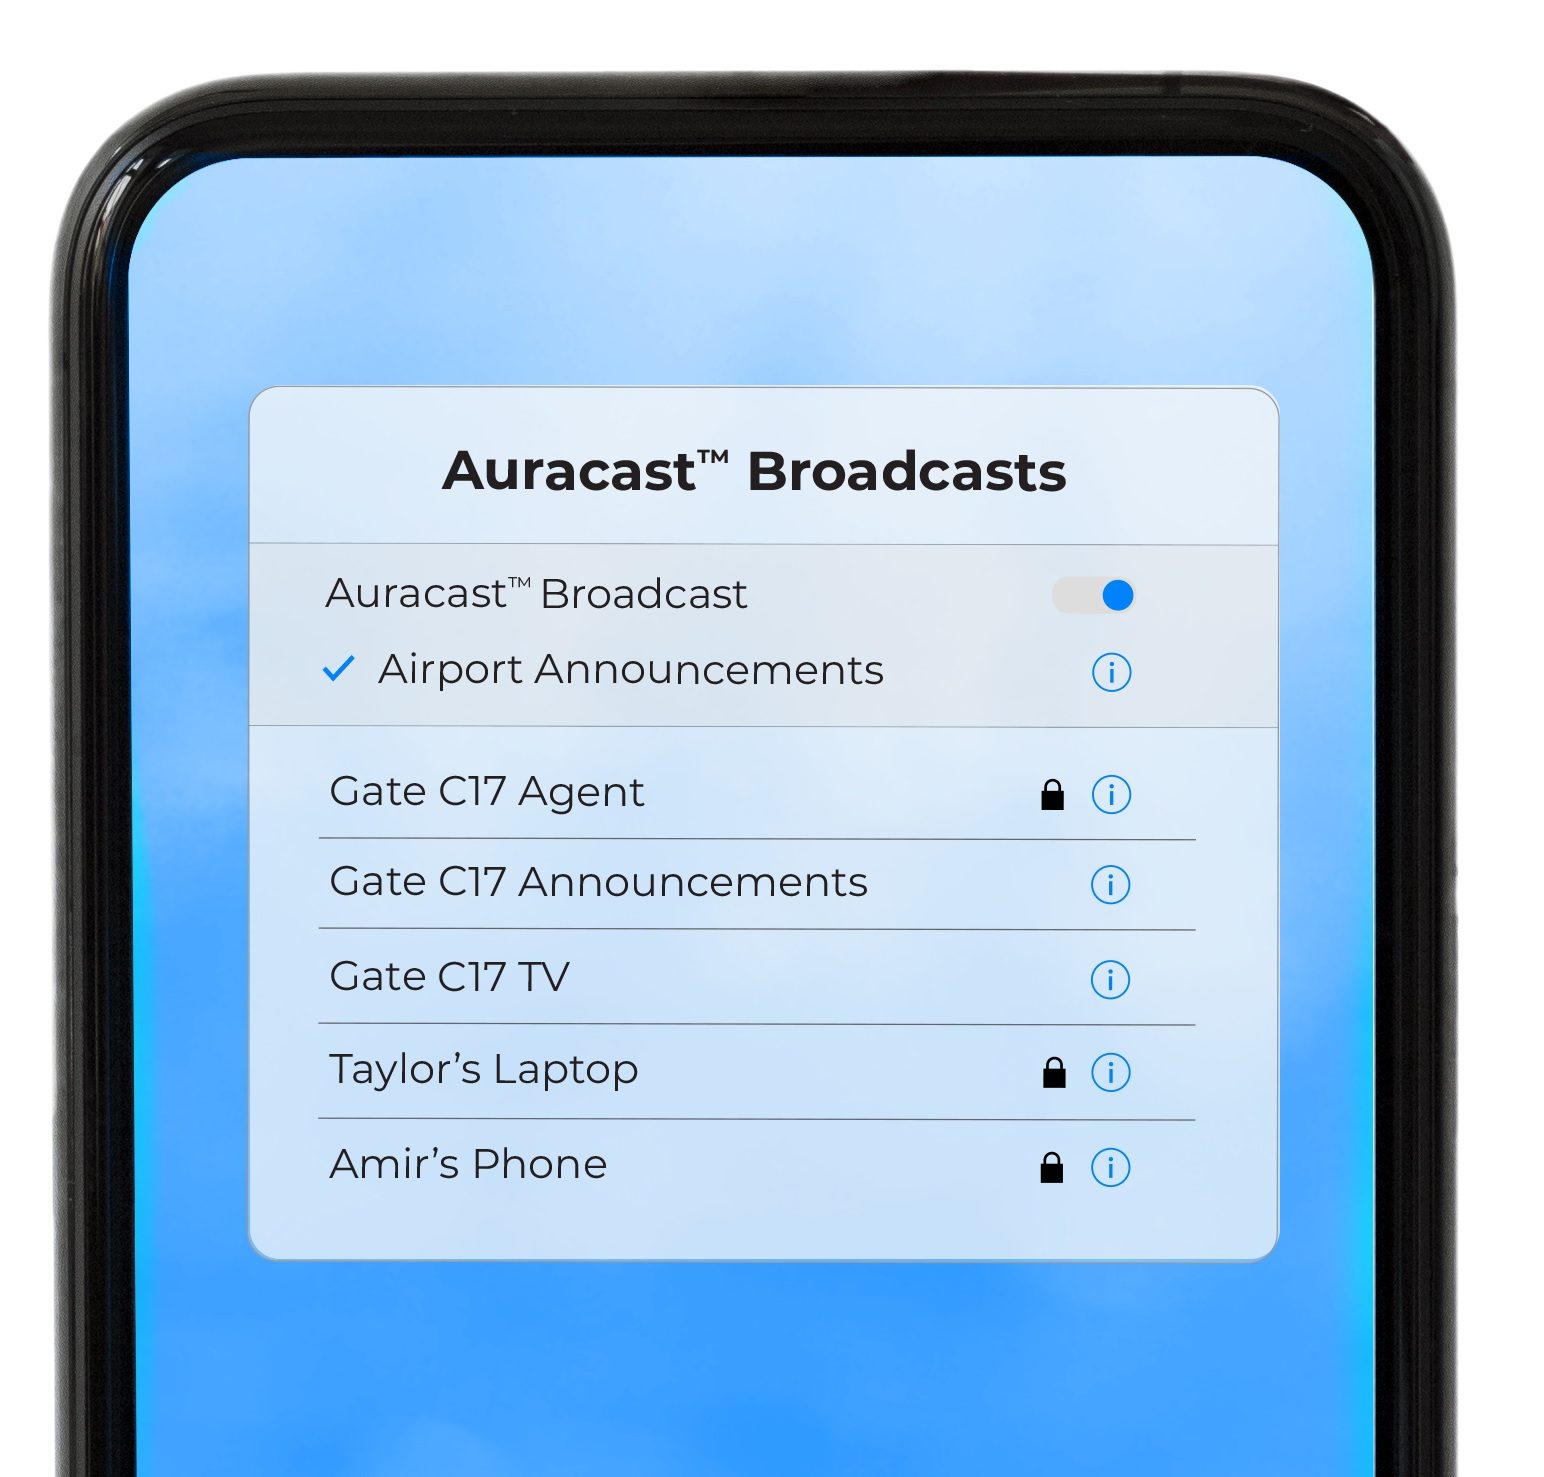 Auracast broadcast